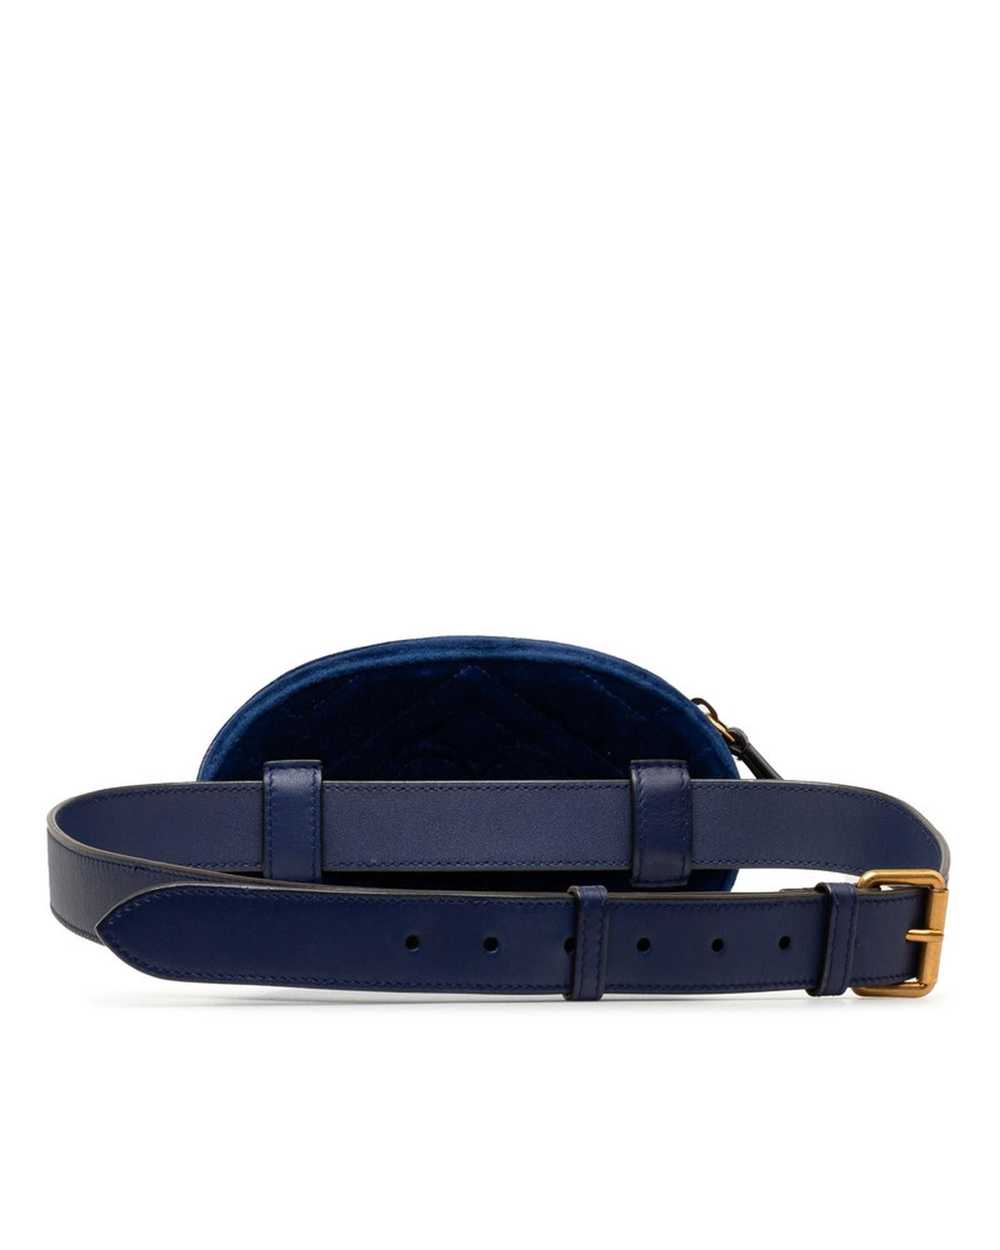 Gucci Blue Velour Belt Bag - GG Marmont - image 3